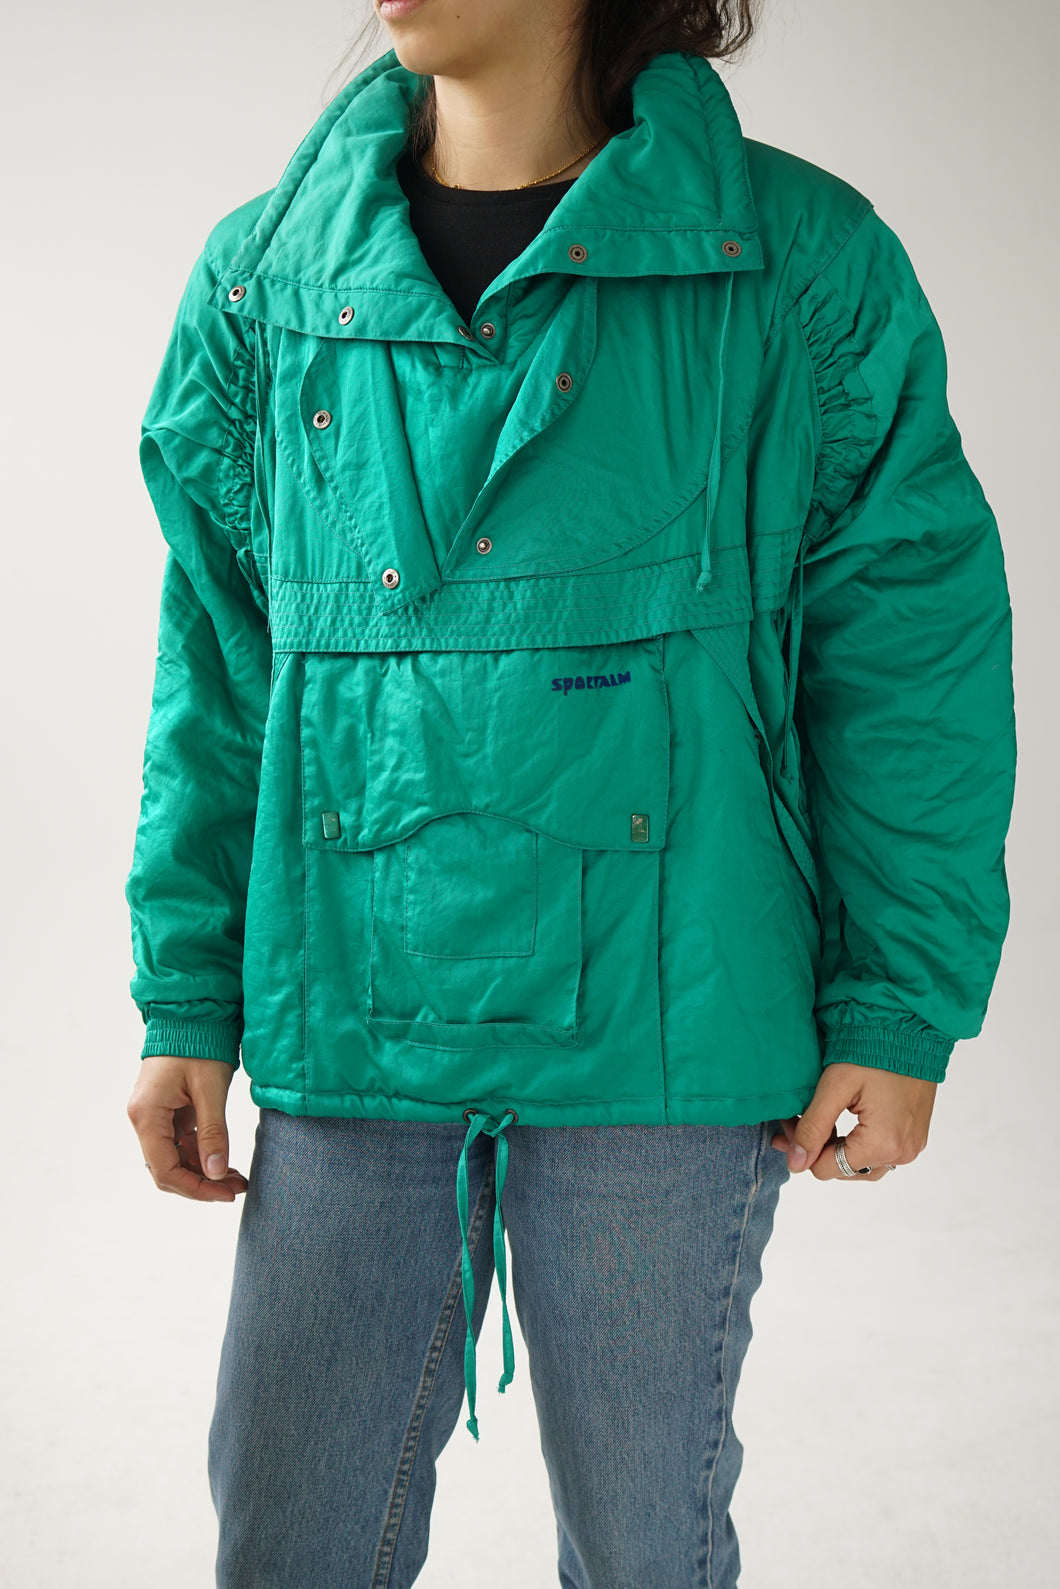 Sportalm light jacket size 40